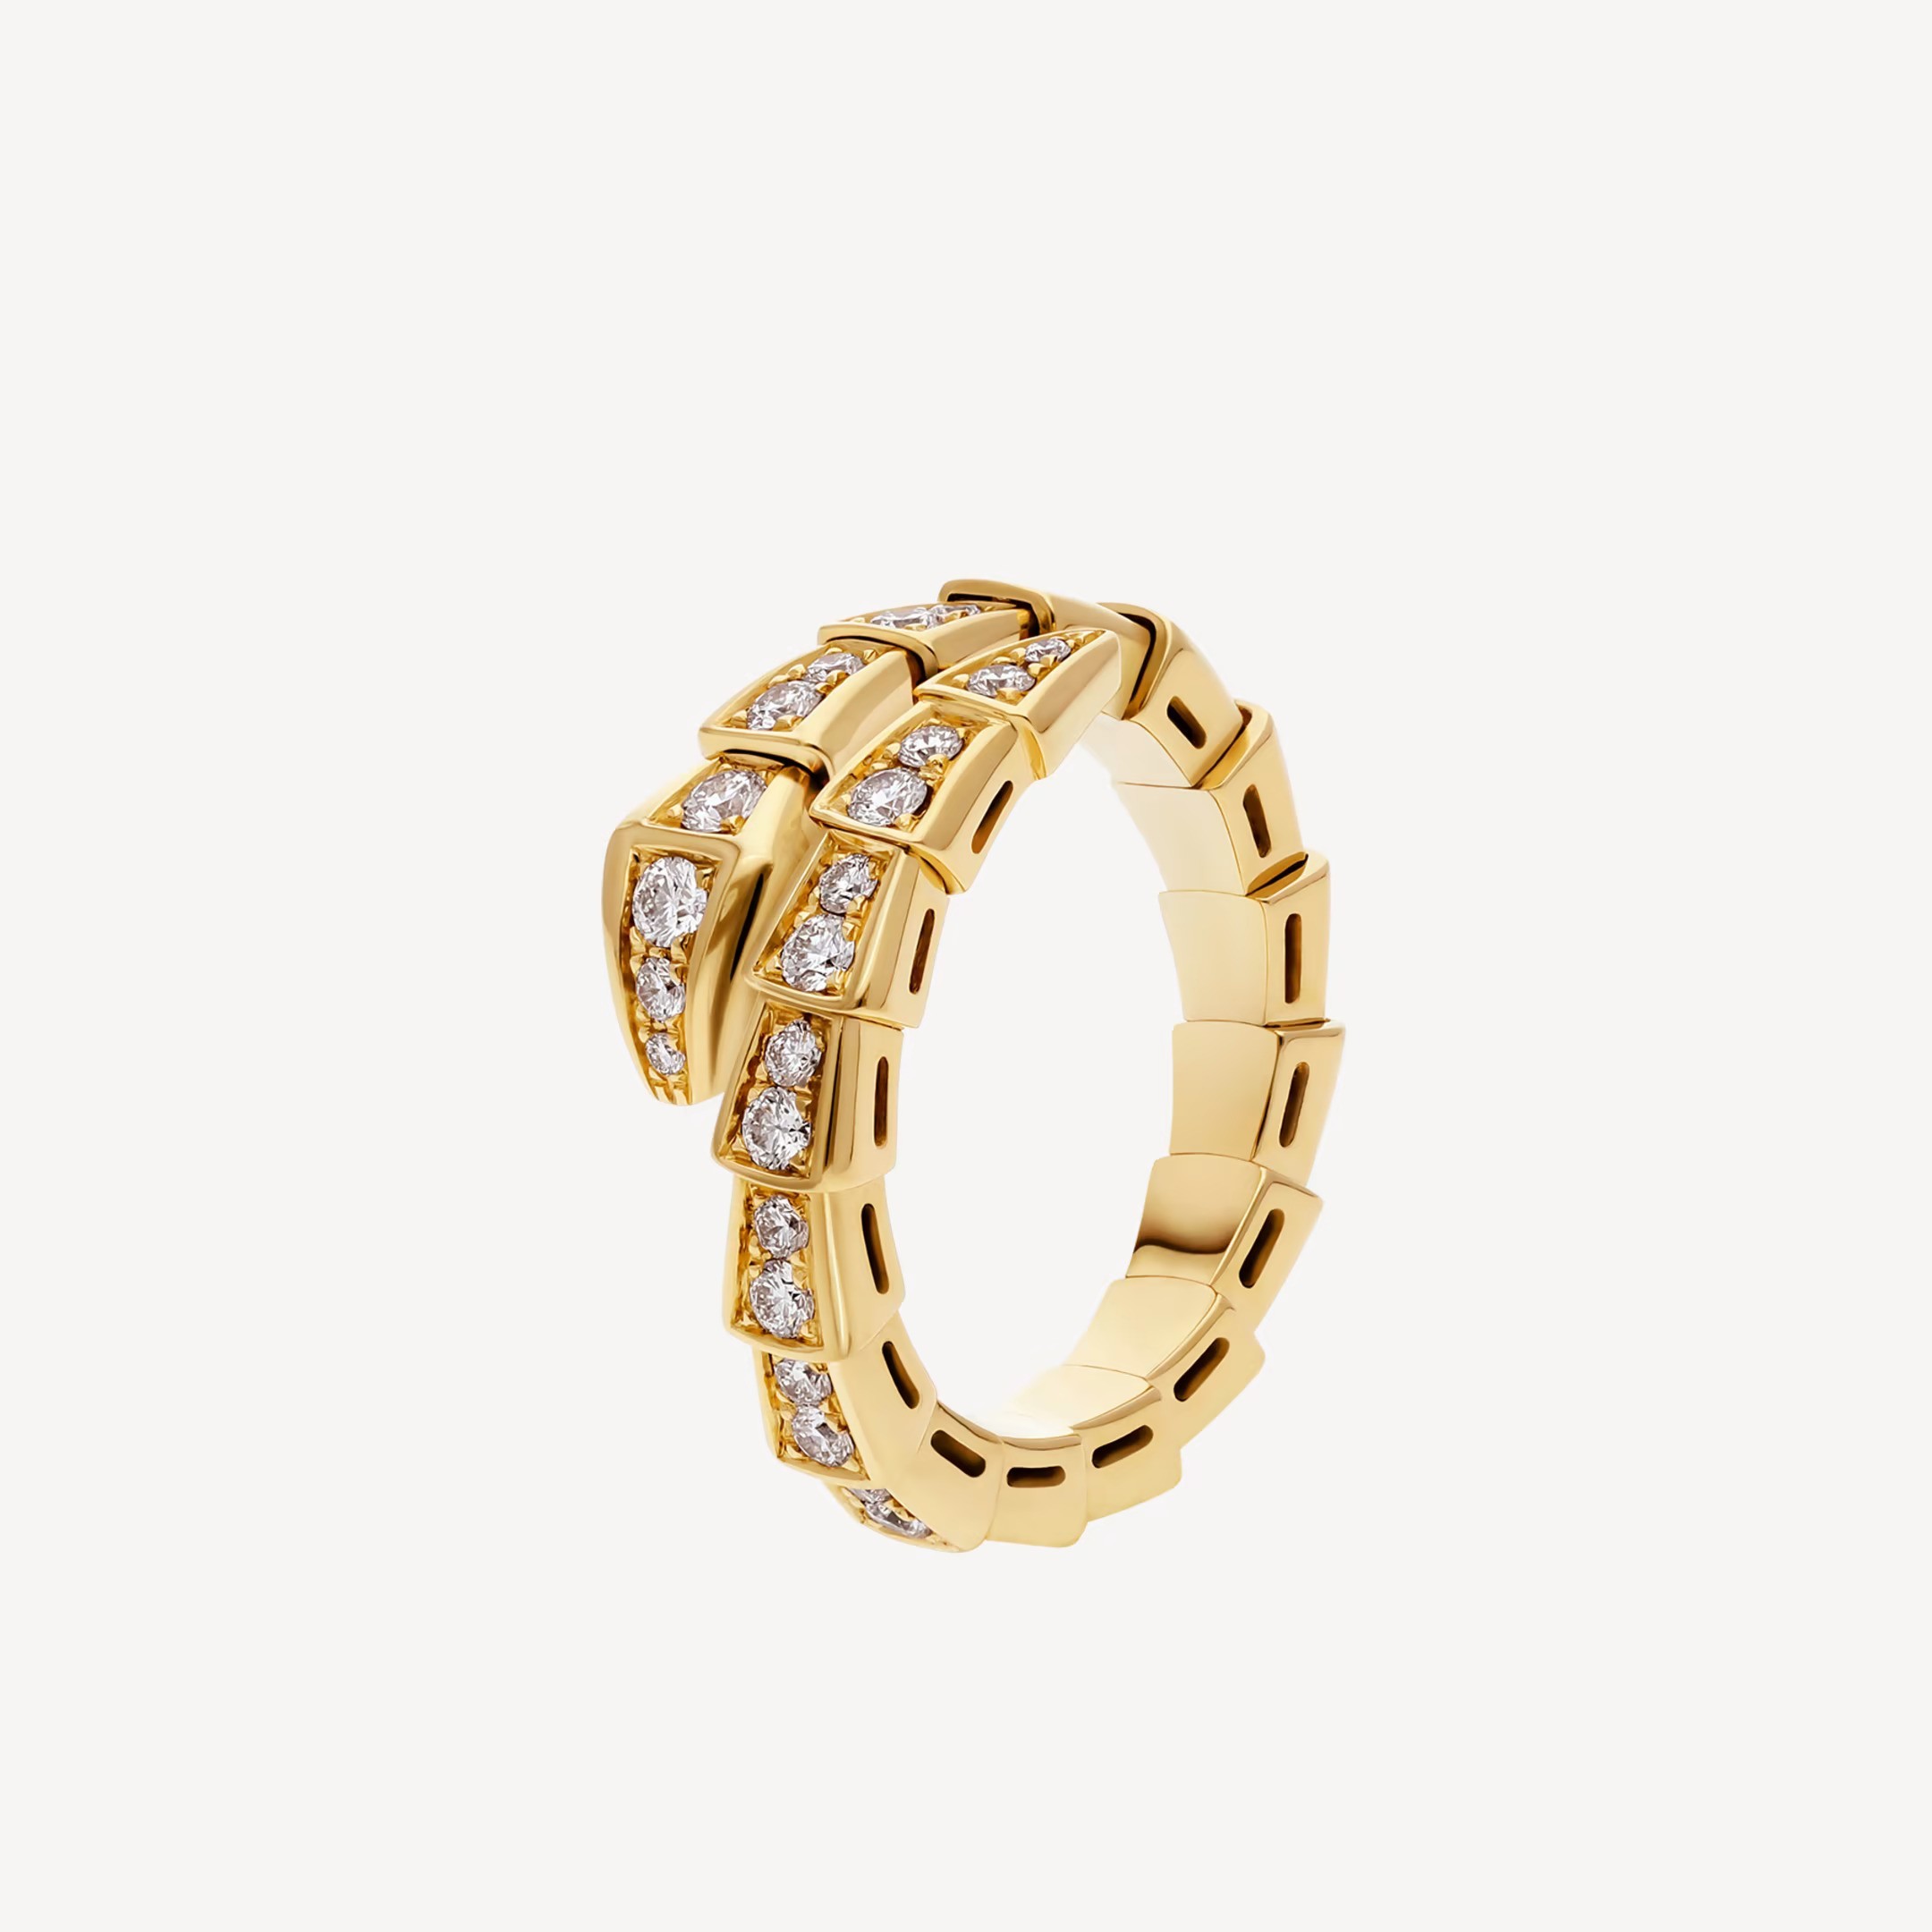 Bulgari Serpenti Viper 18k gold ring set with pavé diamonds